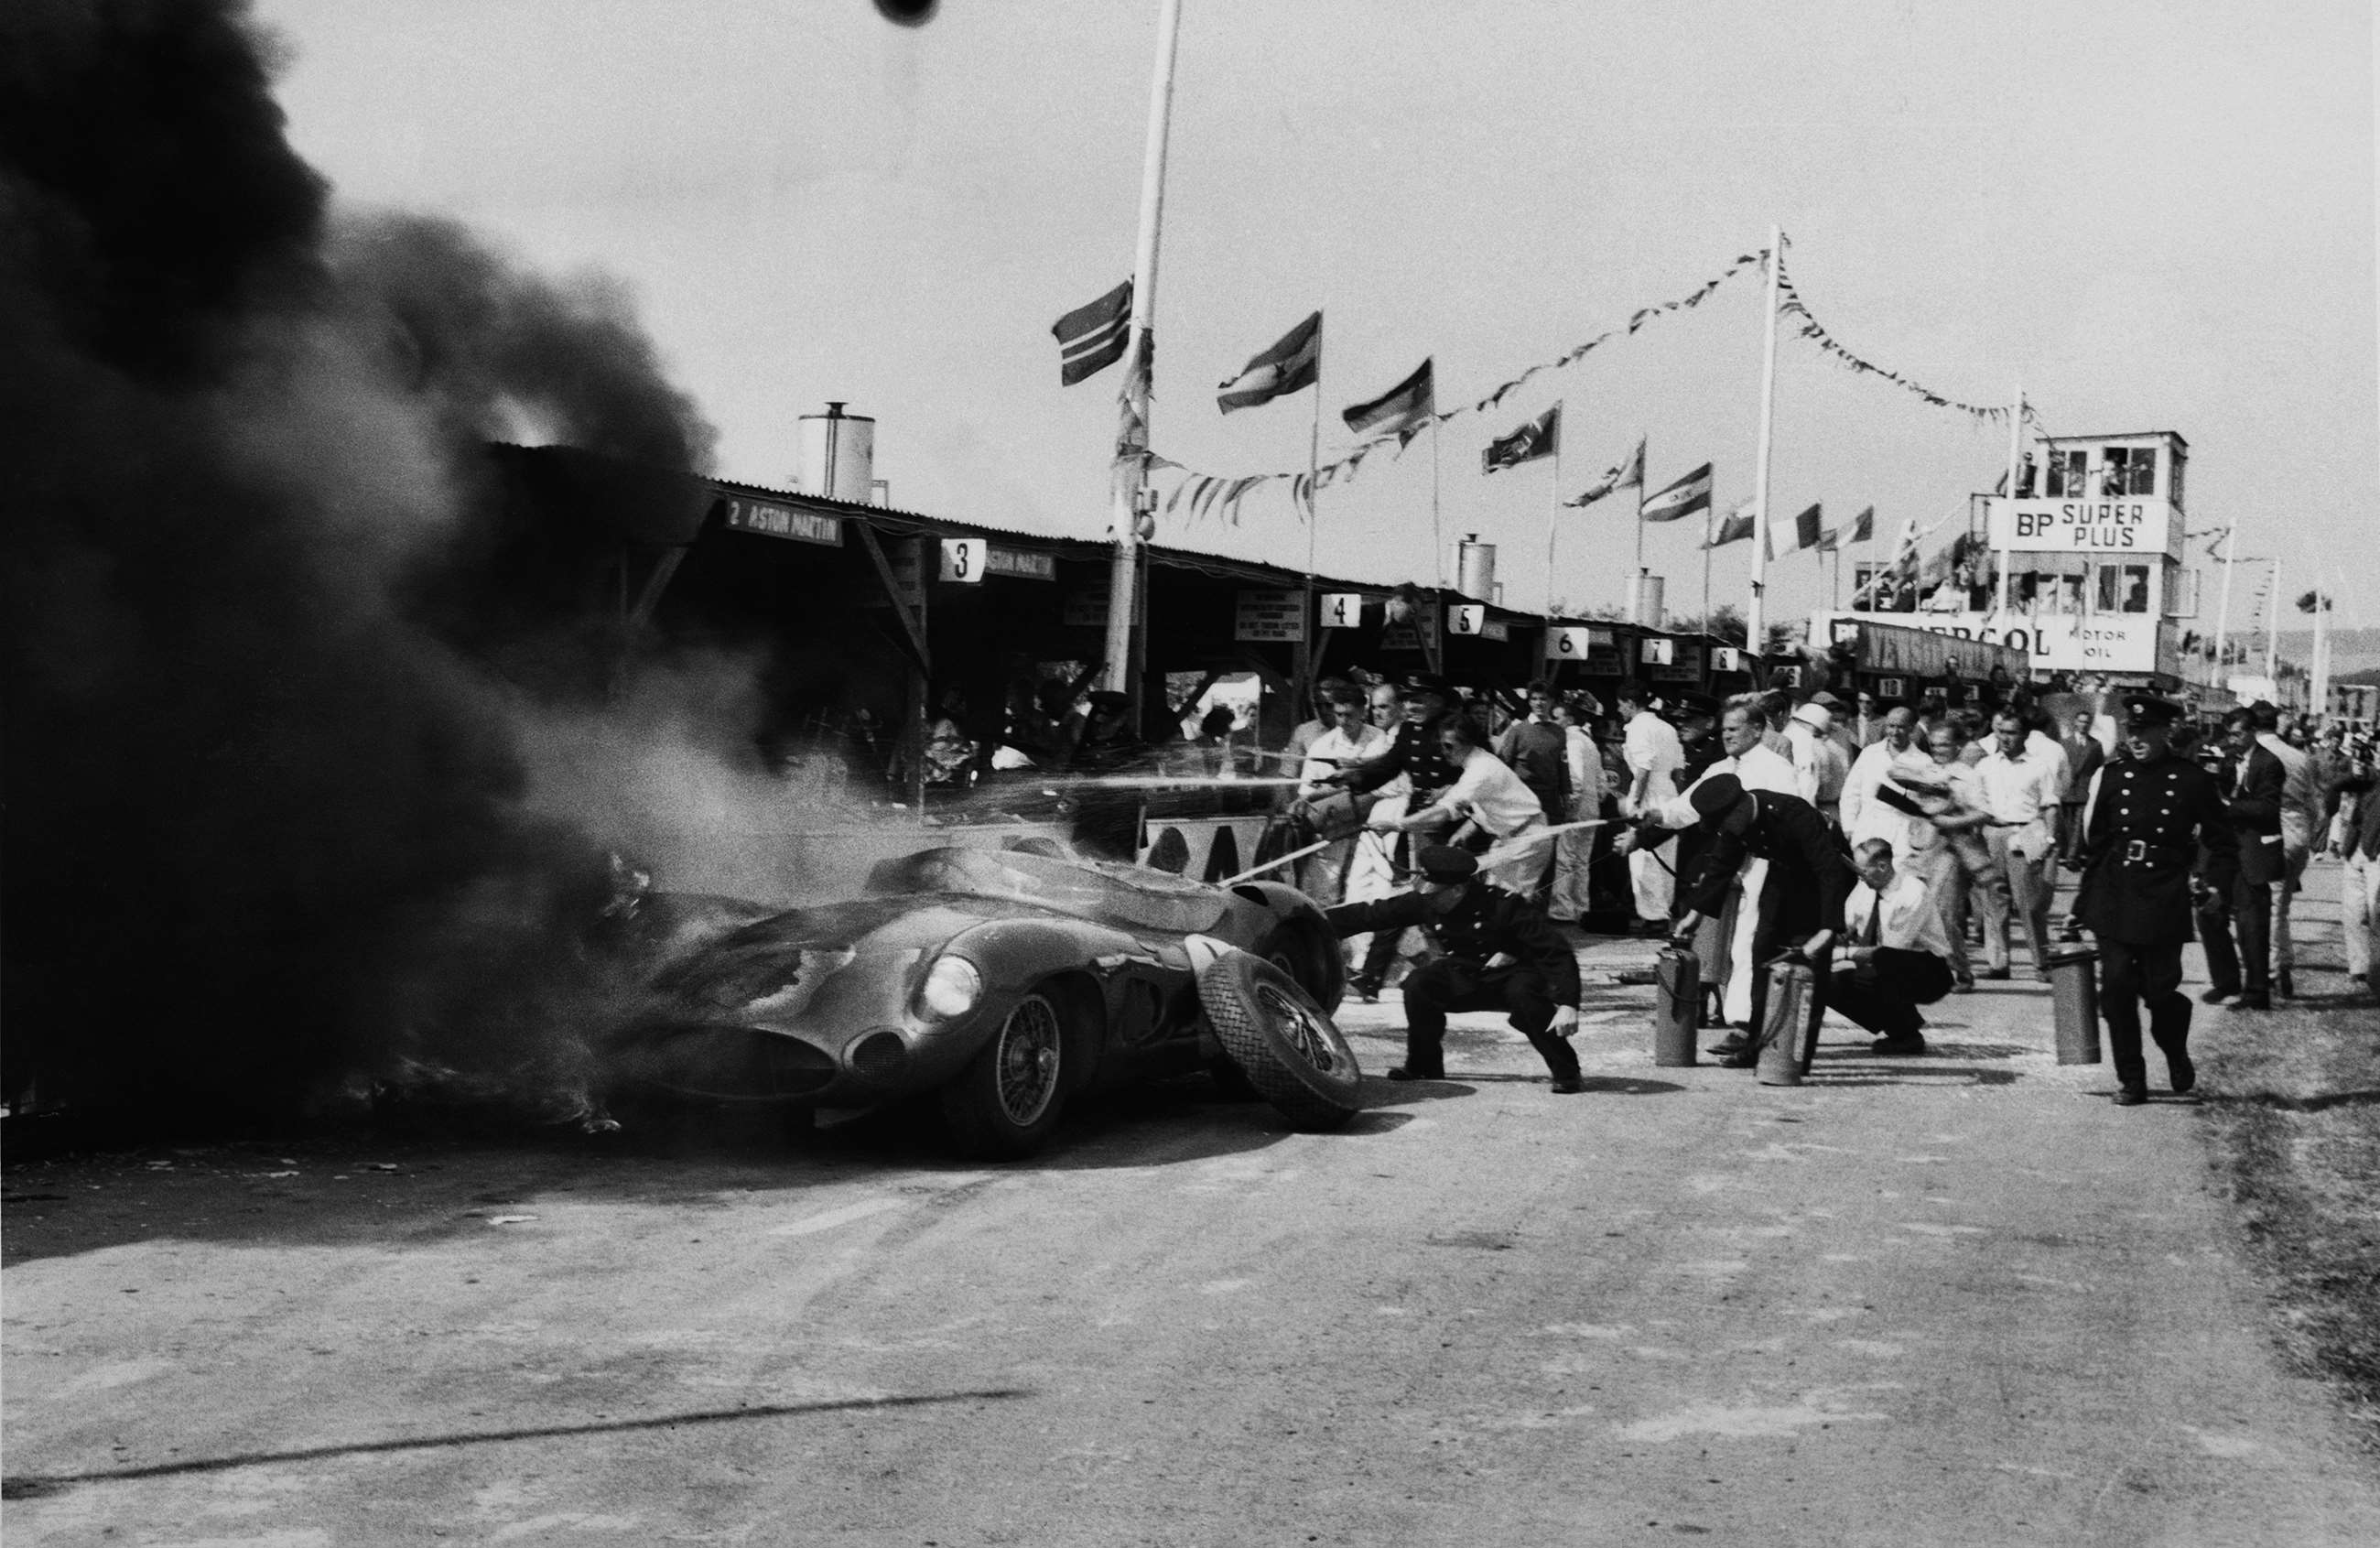 revival-2019-goodwood-1959-world-sportscar-championship-pits-fire-lat-motorsport-images-goodwood-04092019.jpg